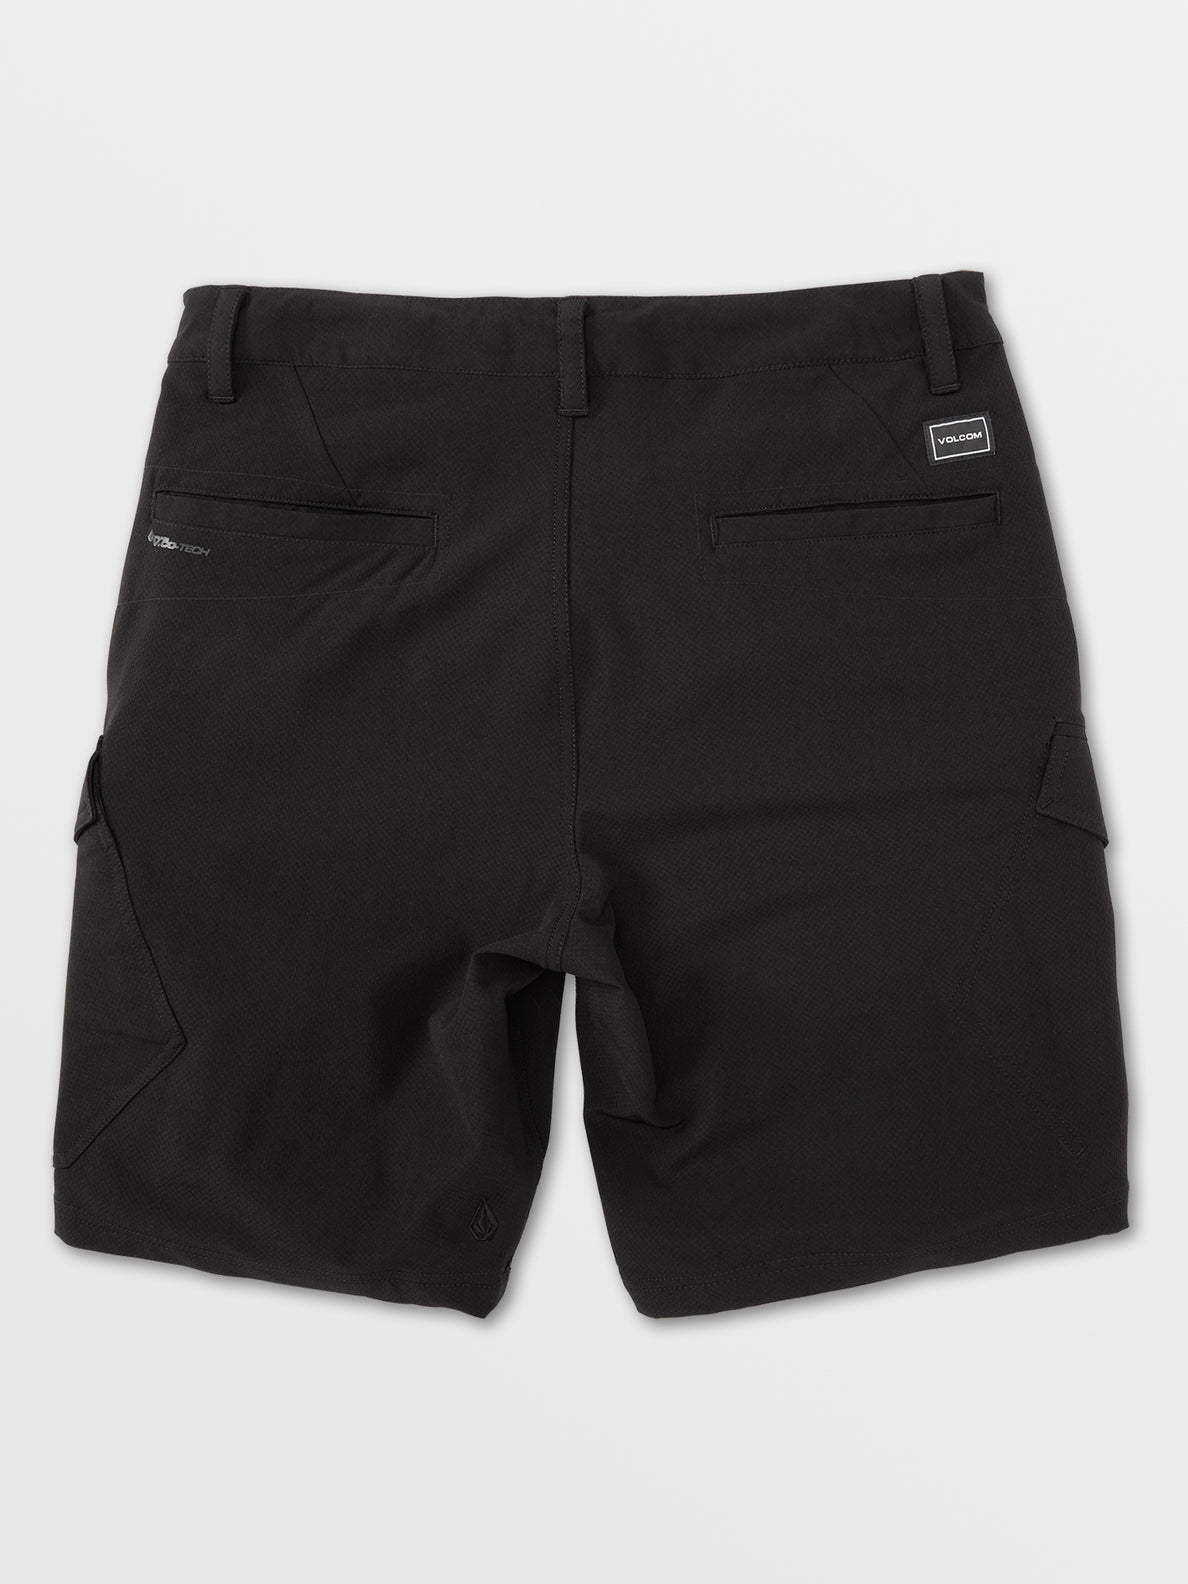 Country Days Hybrid Shorts - Black (A3232100_BLK) [B]